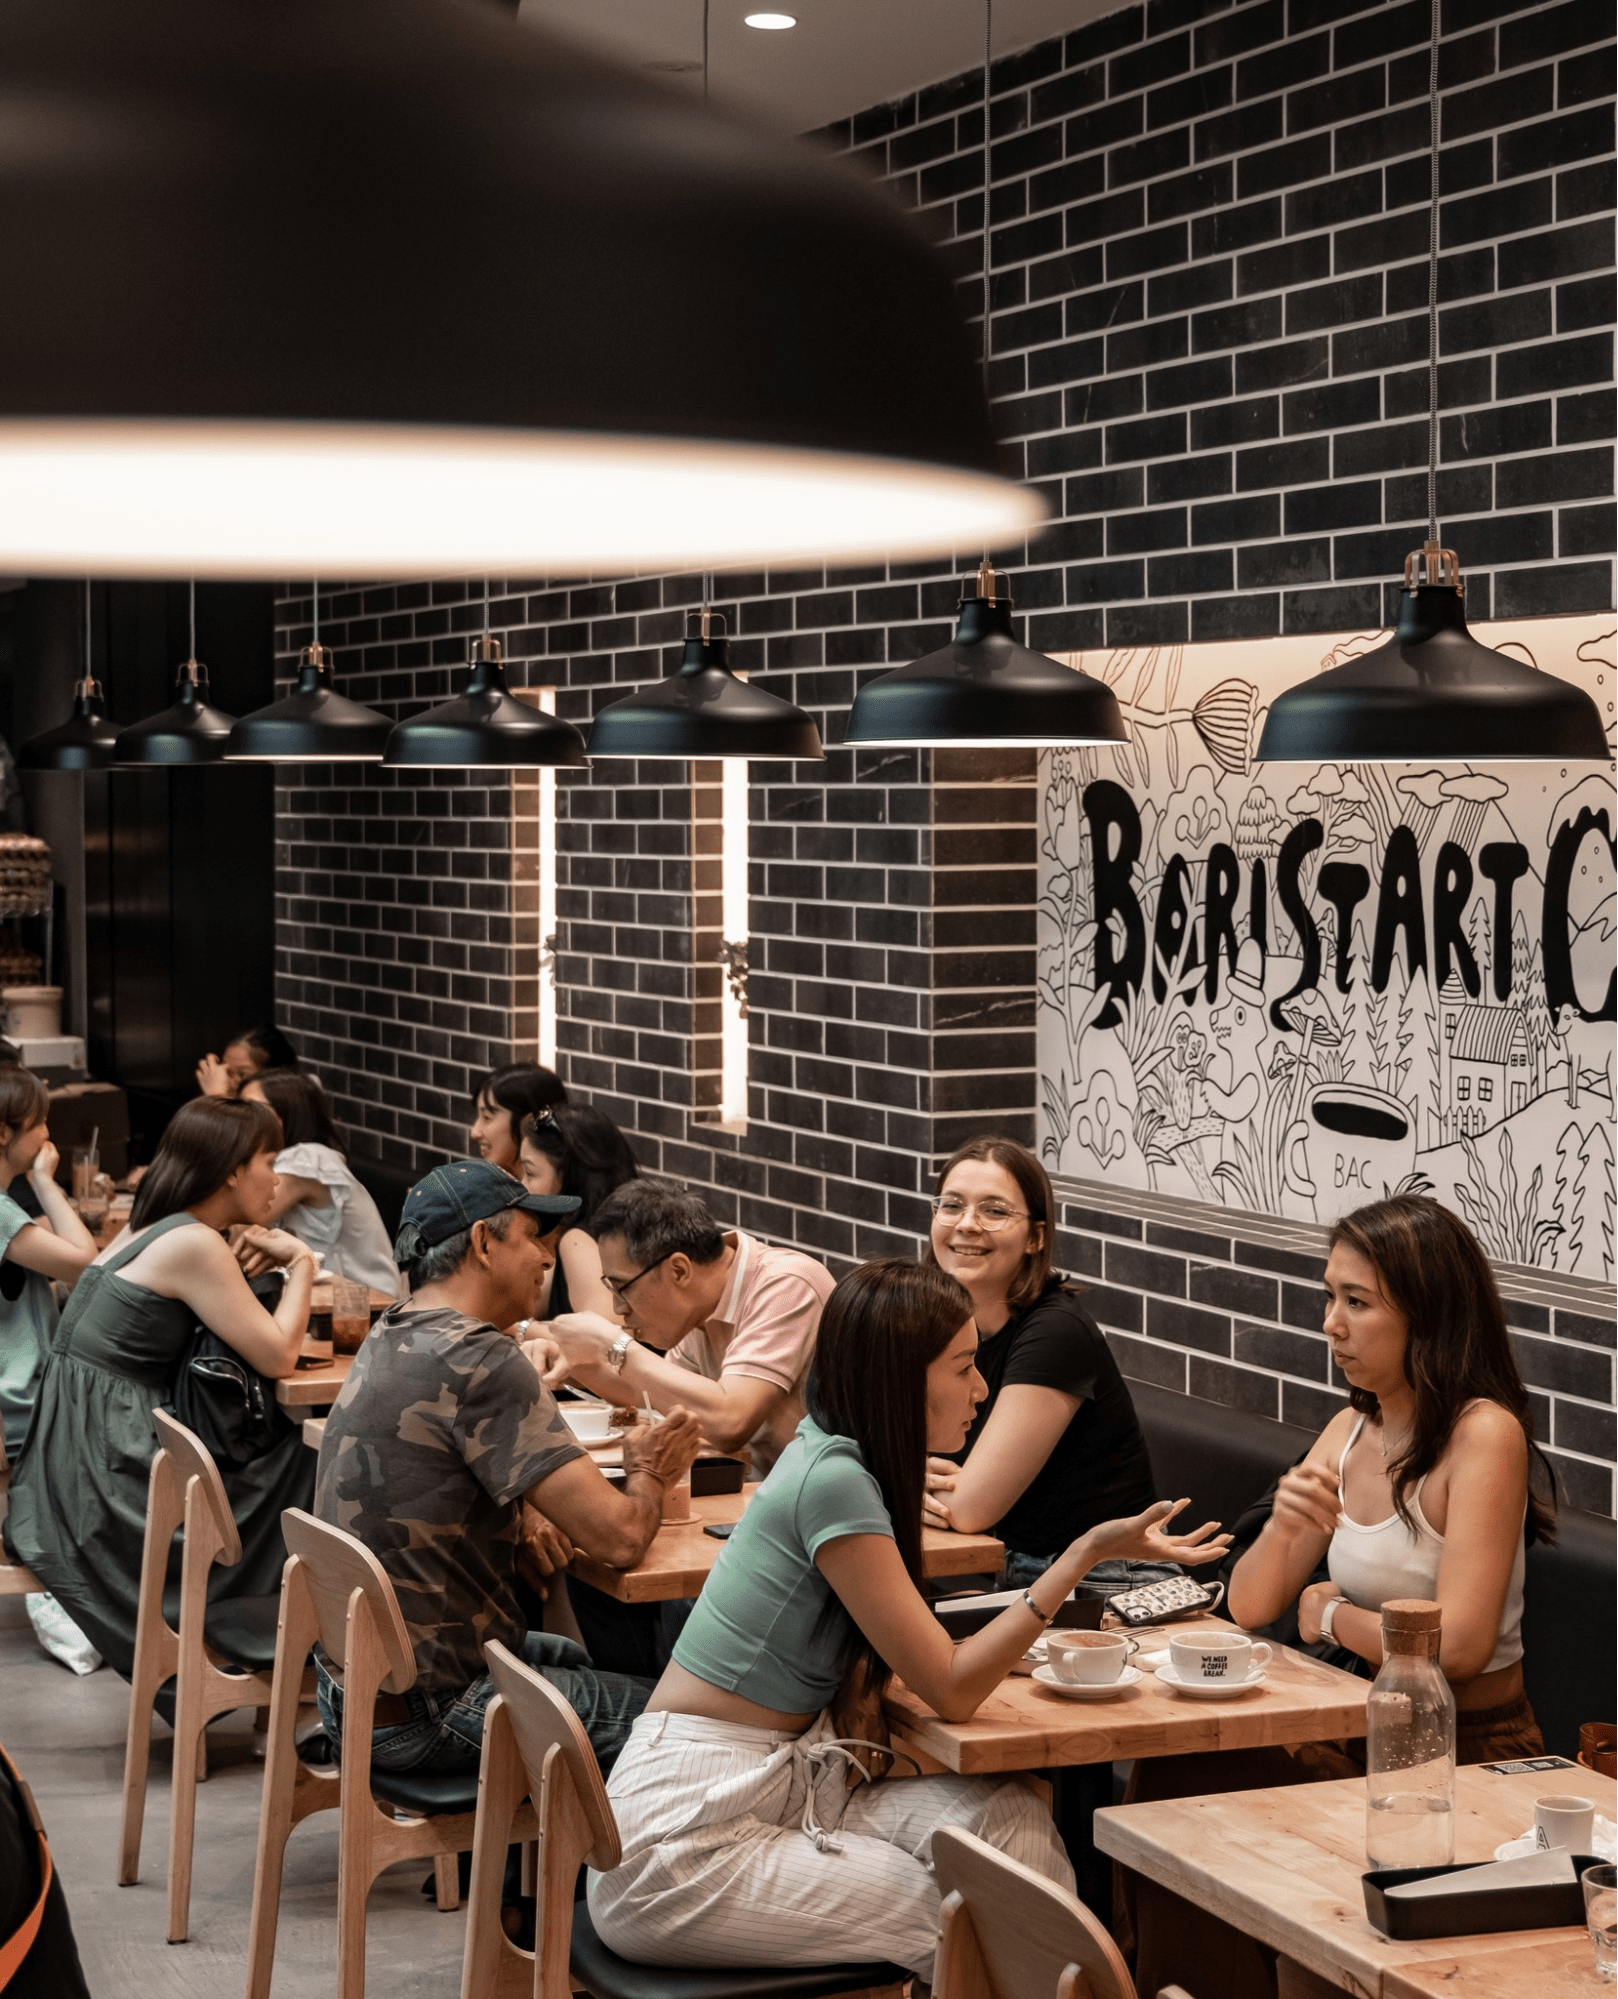 new restaurants cafes baristart coffee exterior